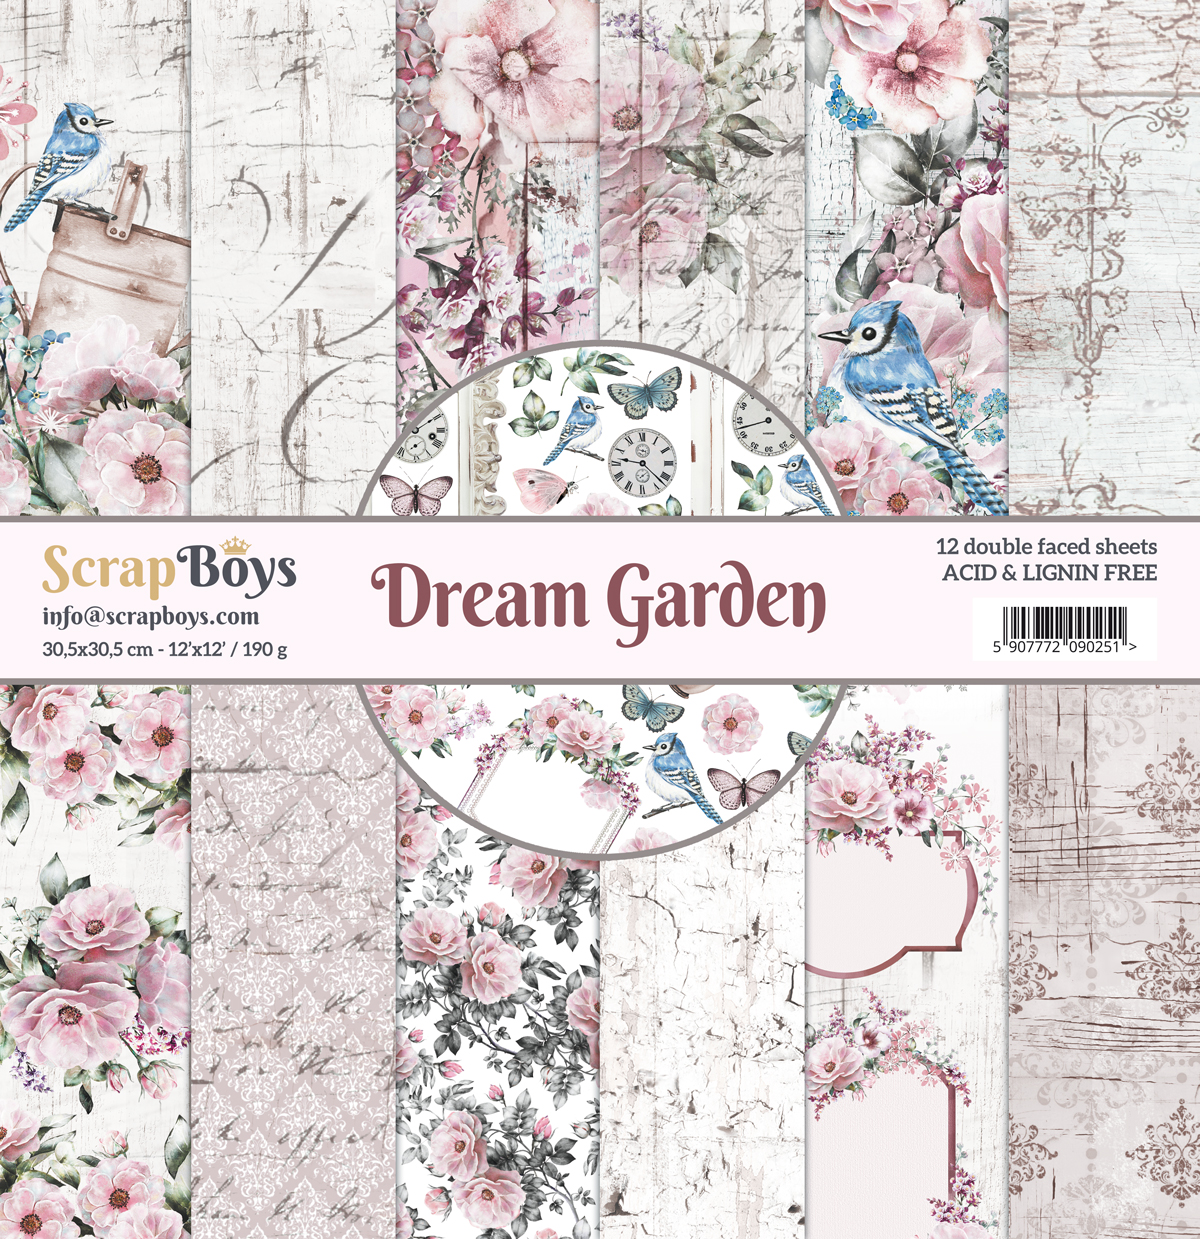 https://www.charmedcardsandcrafts.co.uk/acatalog/Scrap-Boys-Dream-Garden-p1.html